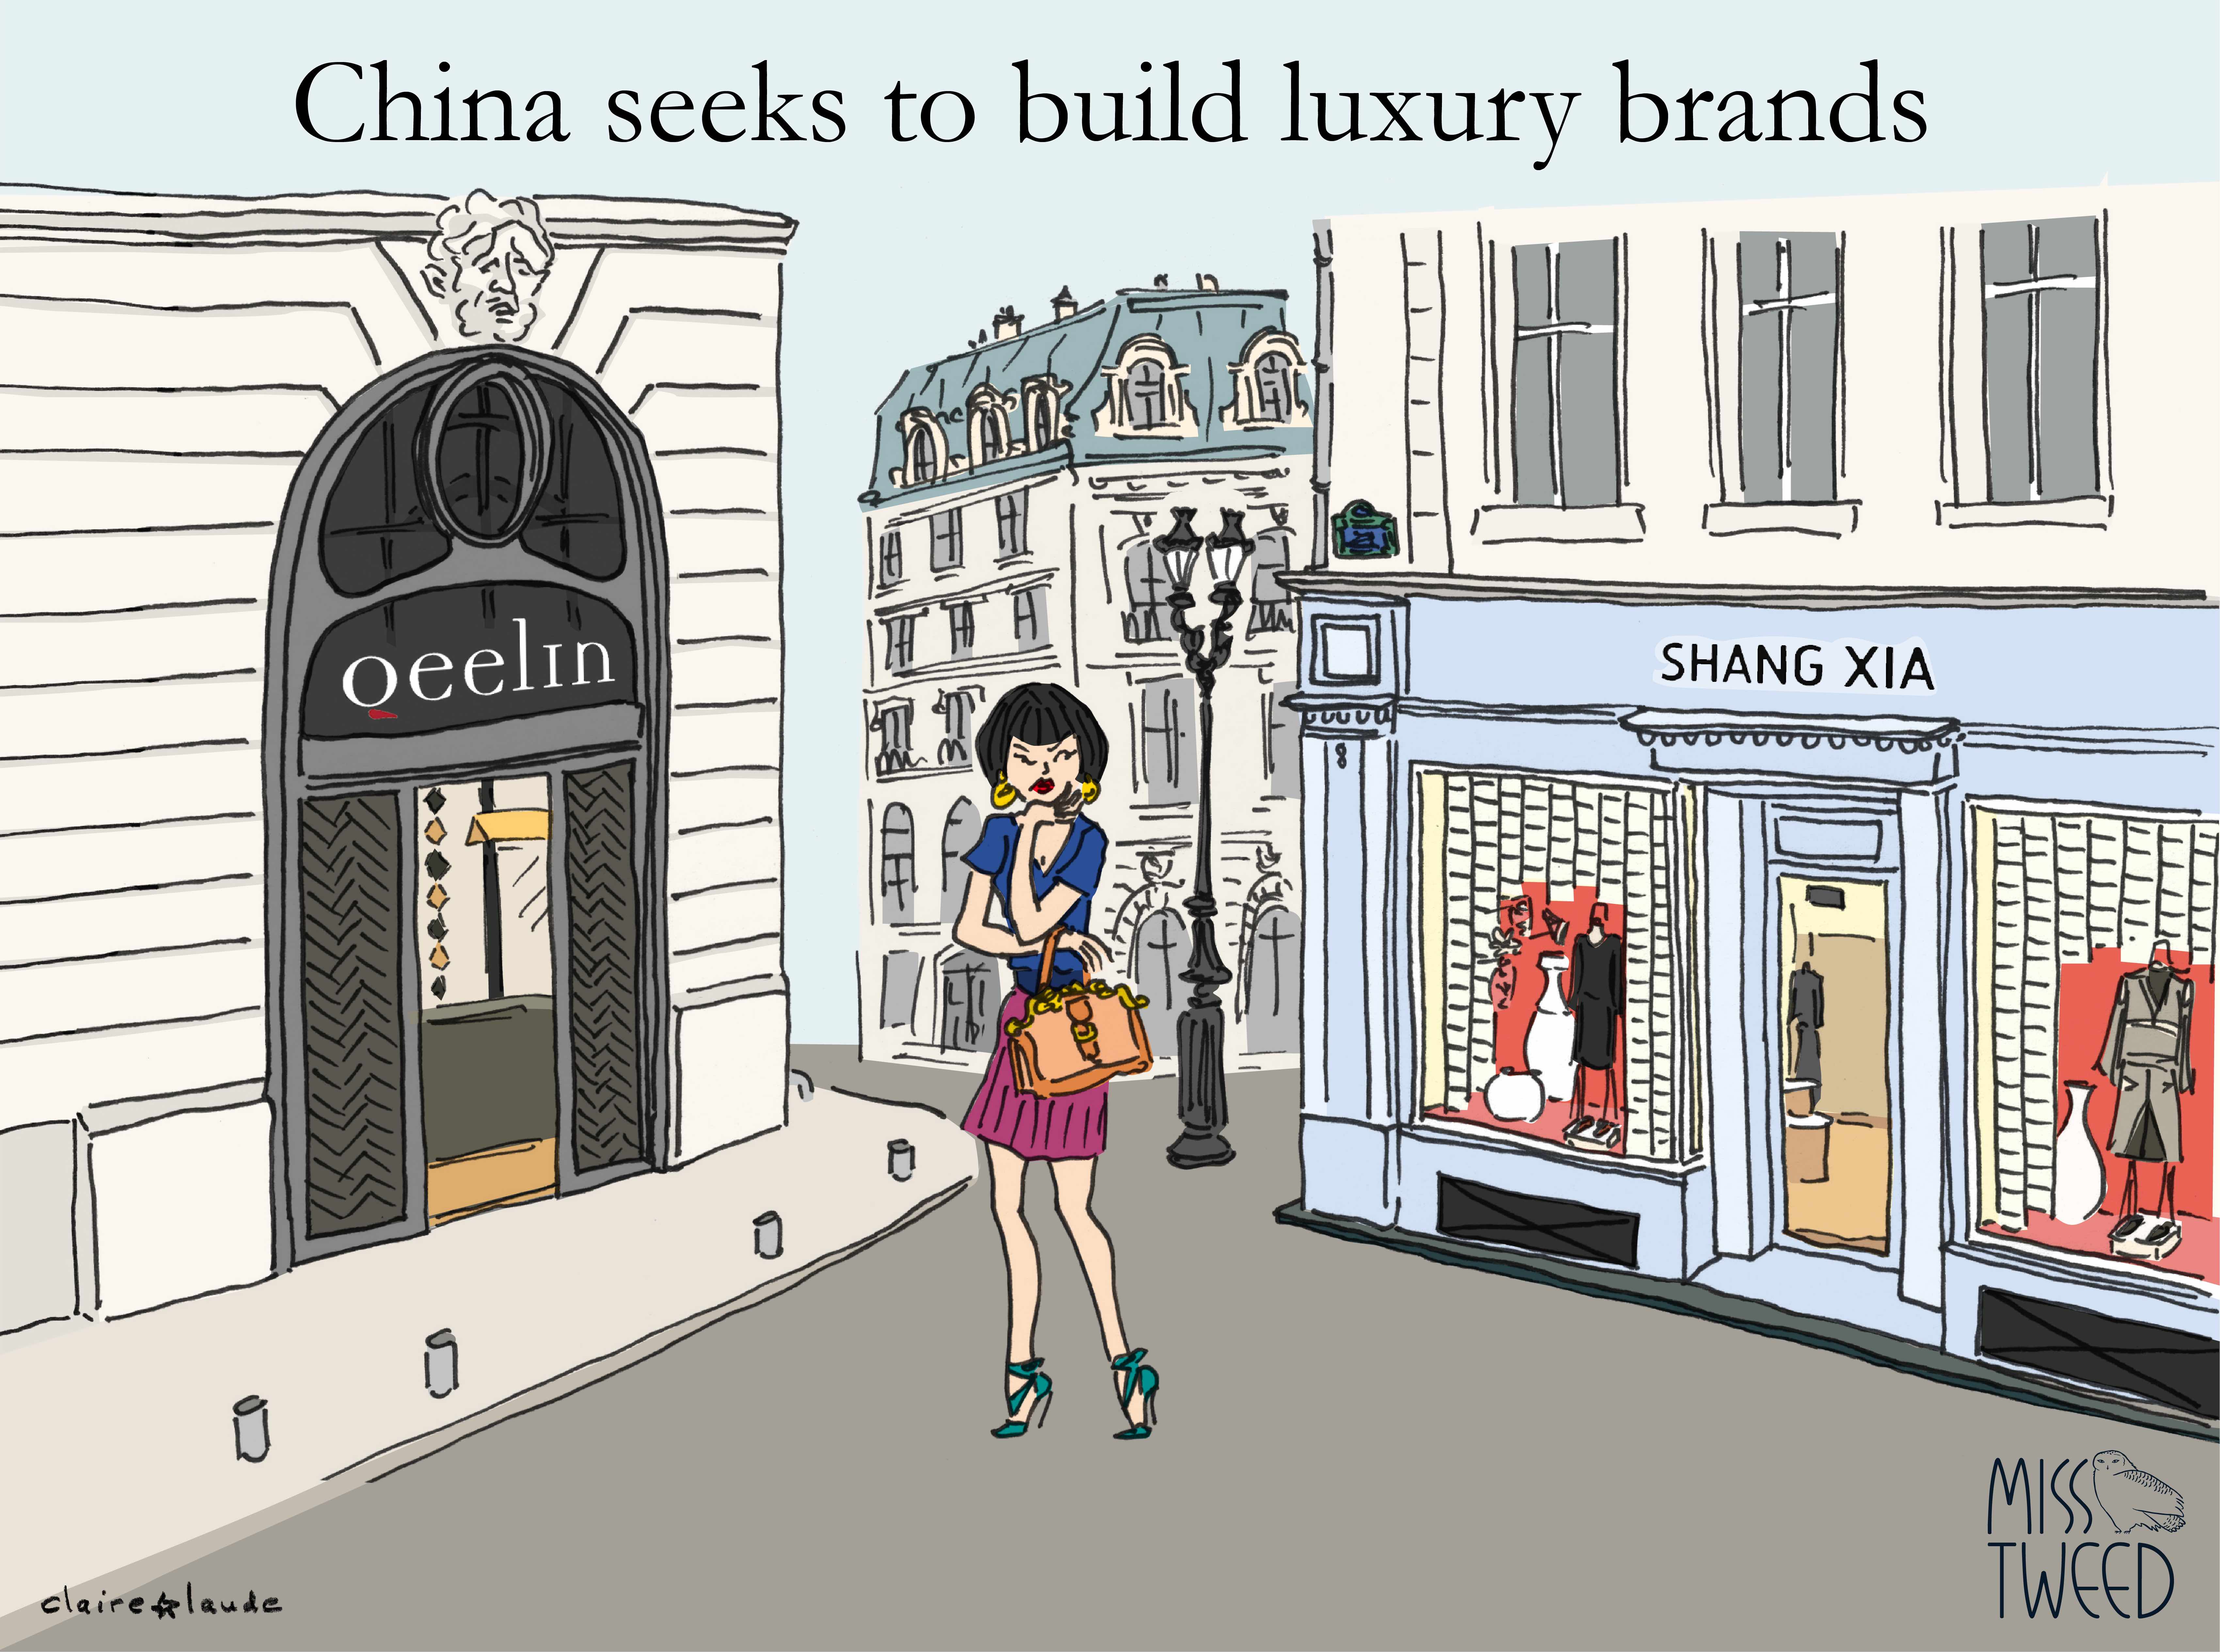 China seeks to build luxury brands